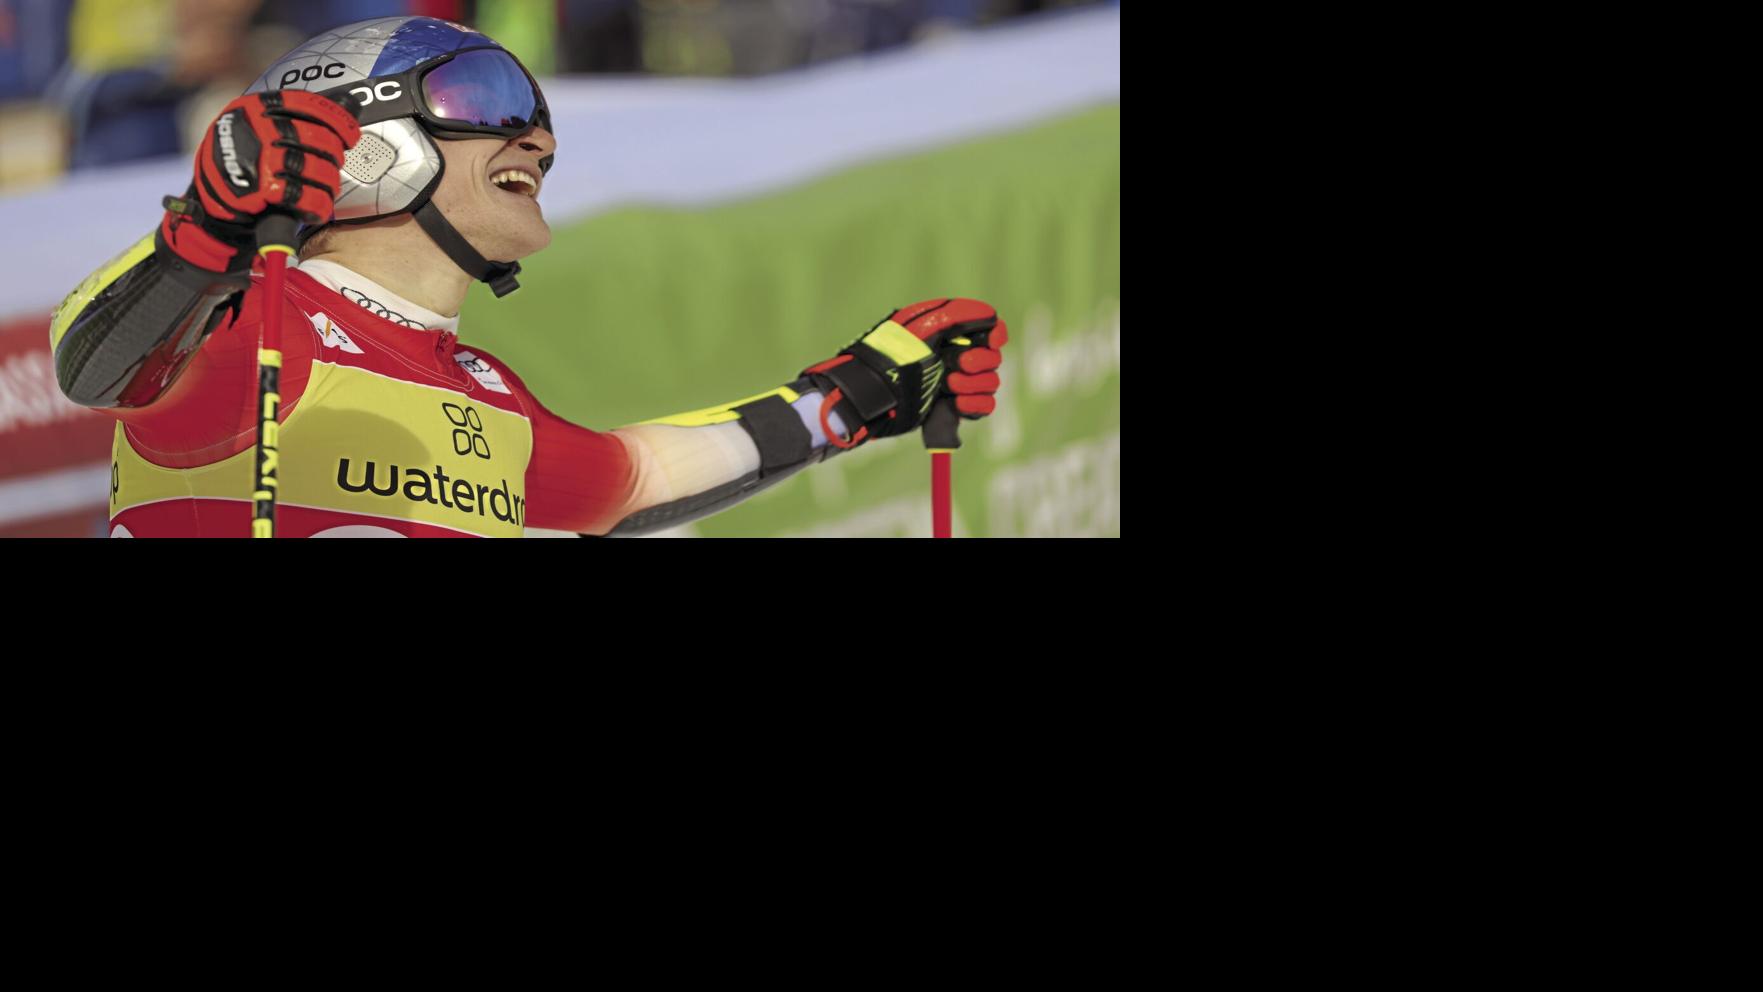 Swiss skier Odermatt wins GS, secures discipline title